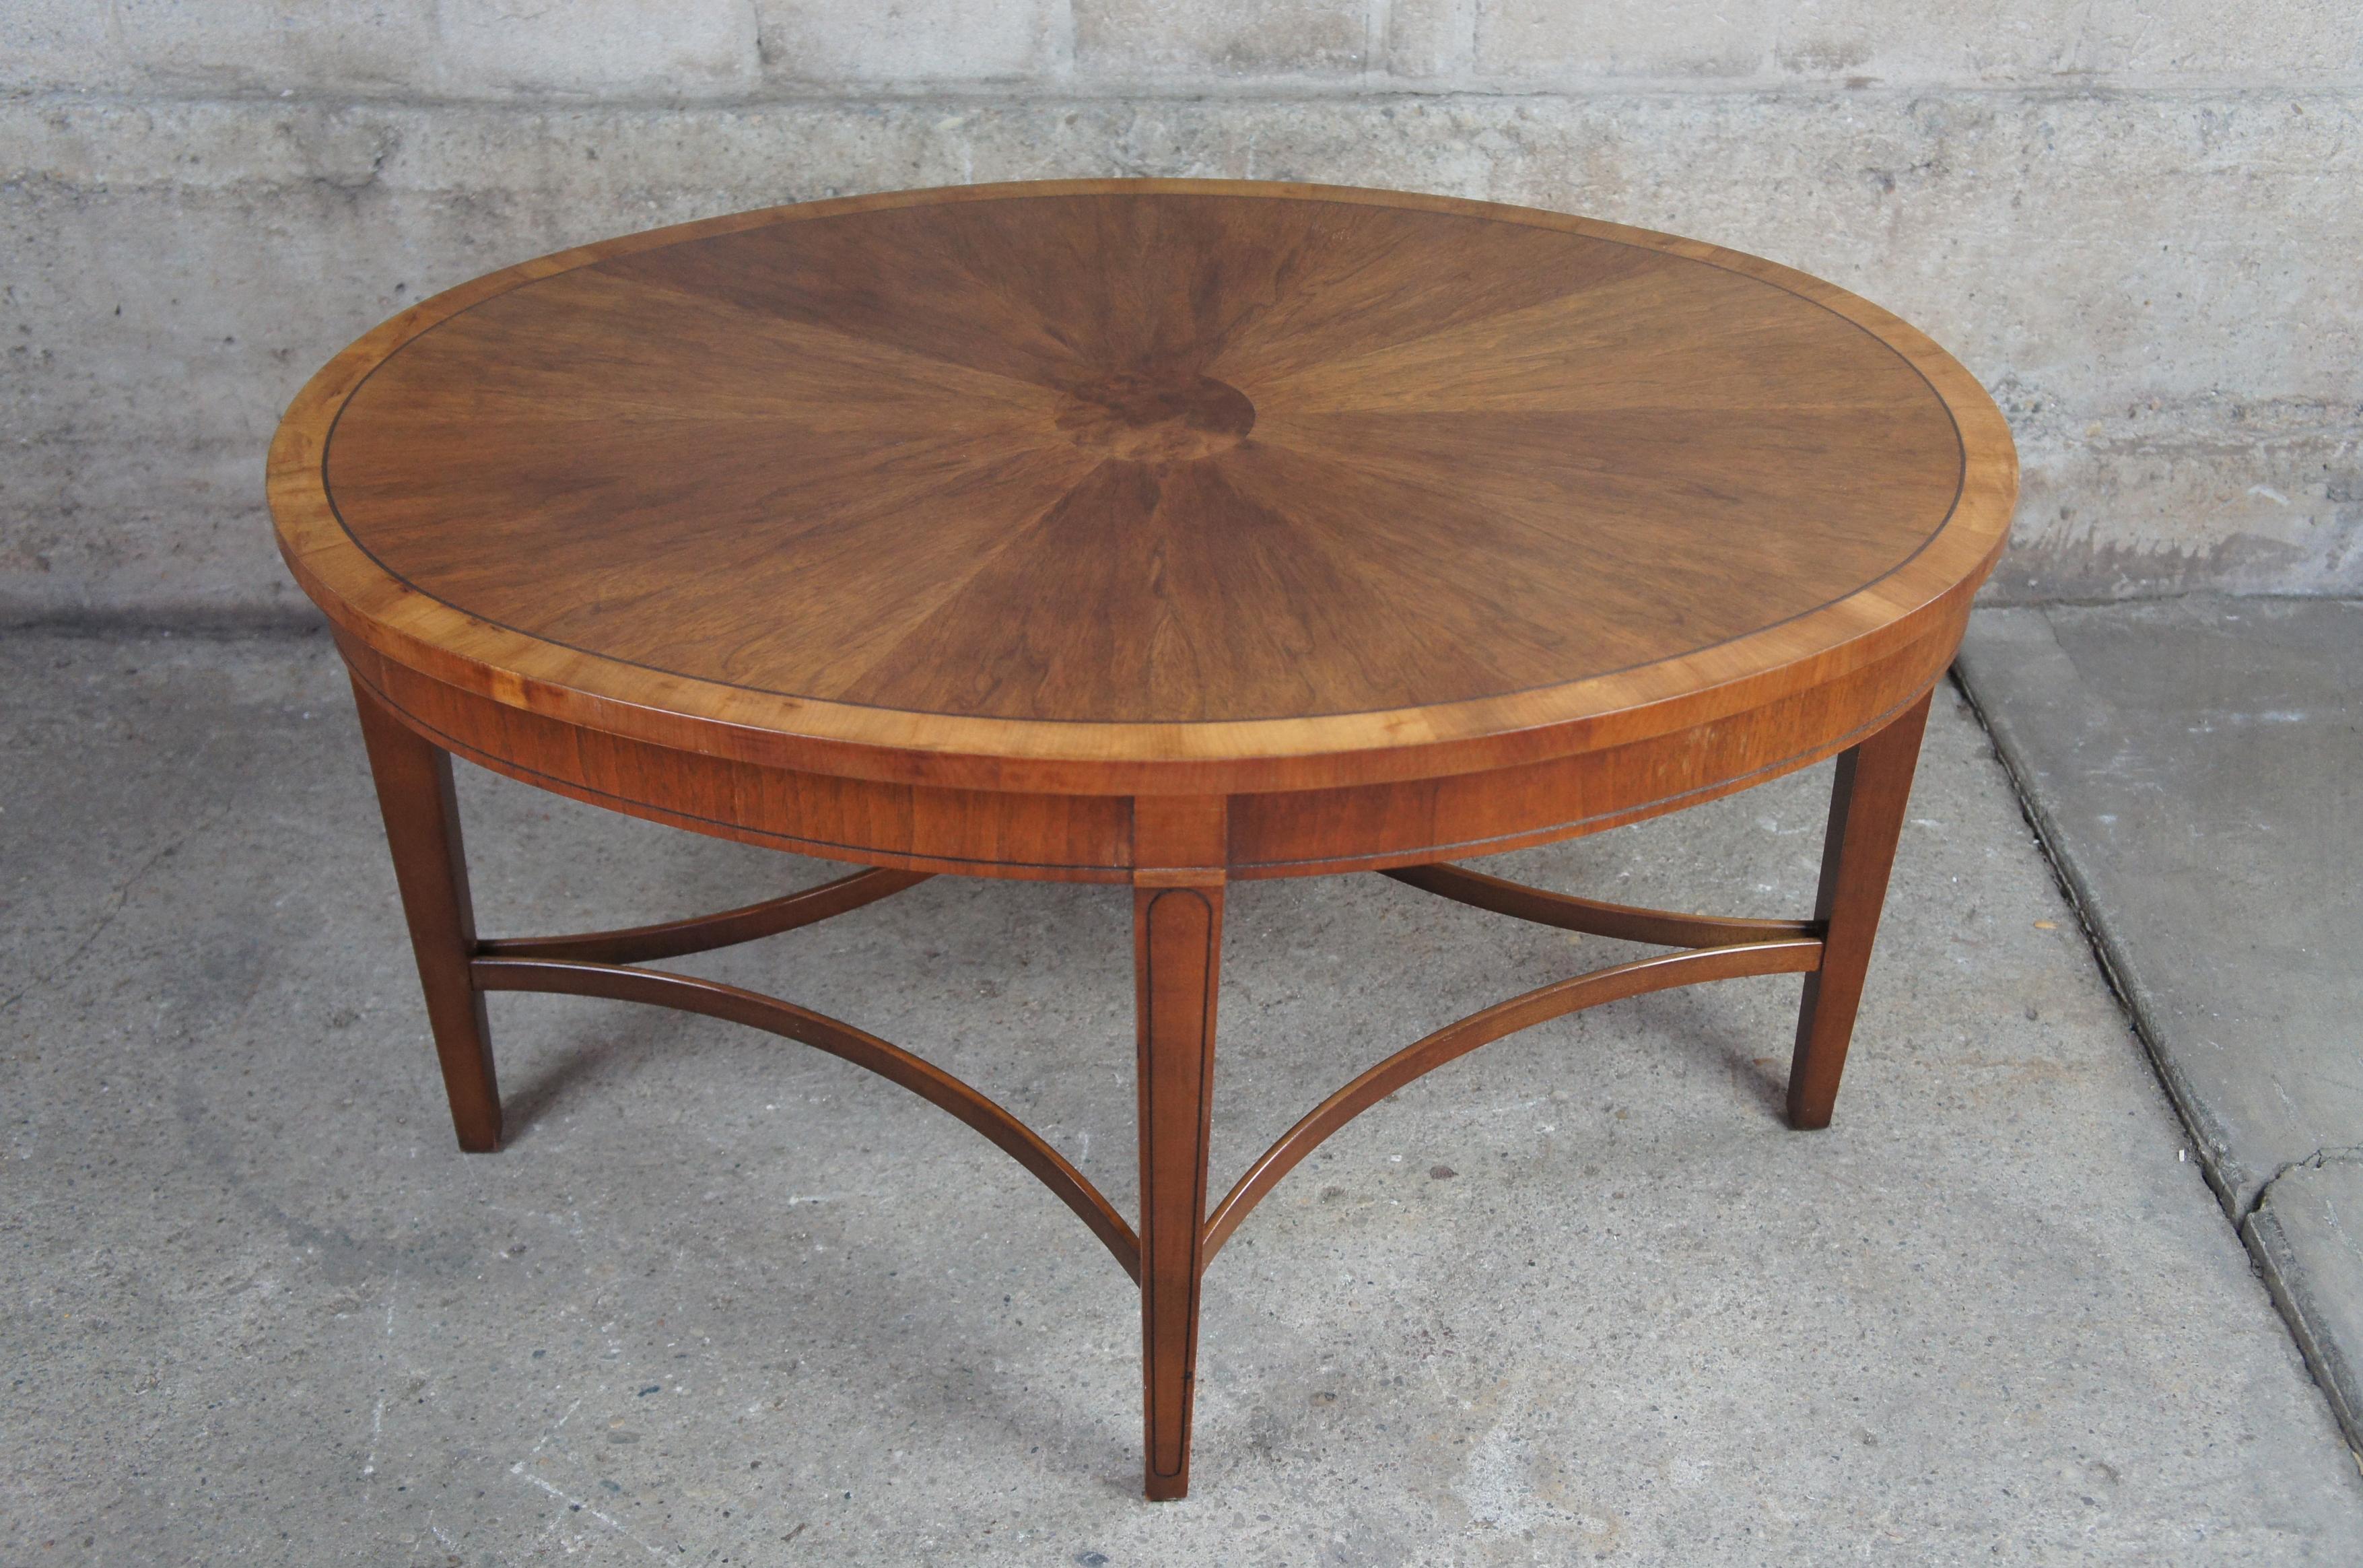 Baker Furniture Laura Ashley Inlaid Mahogany Burl Wood Coffee Table Sheraton 2